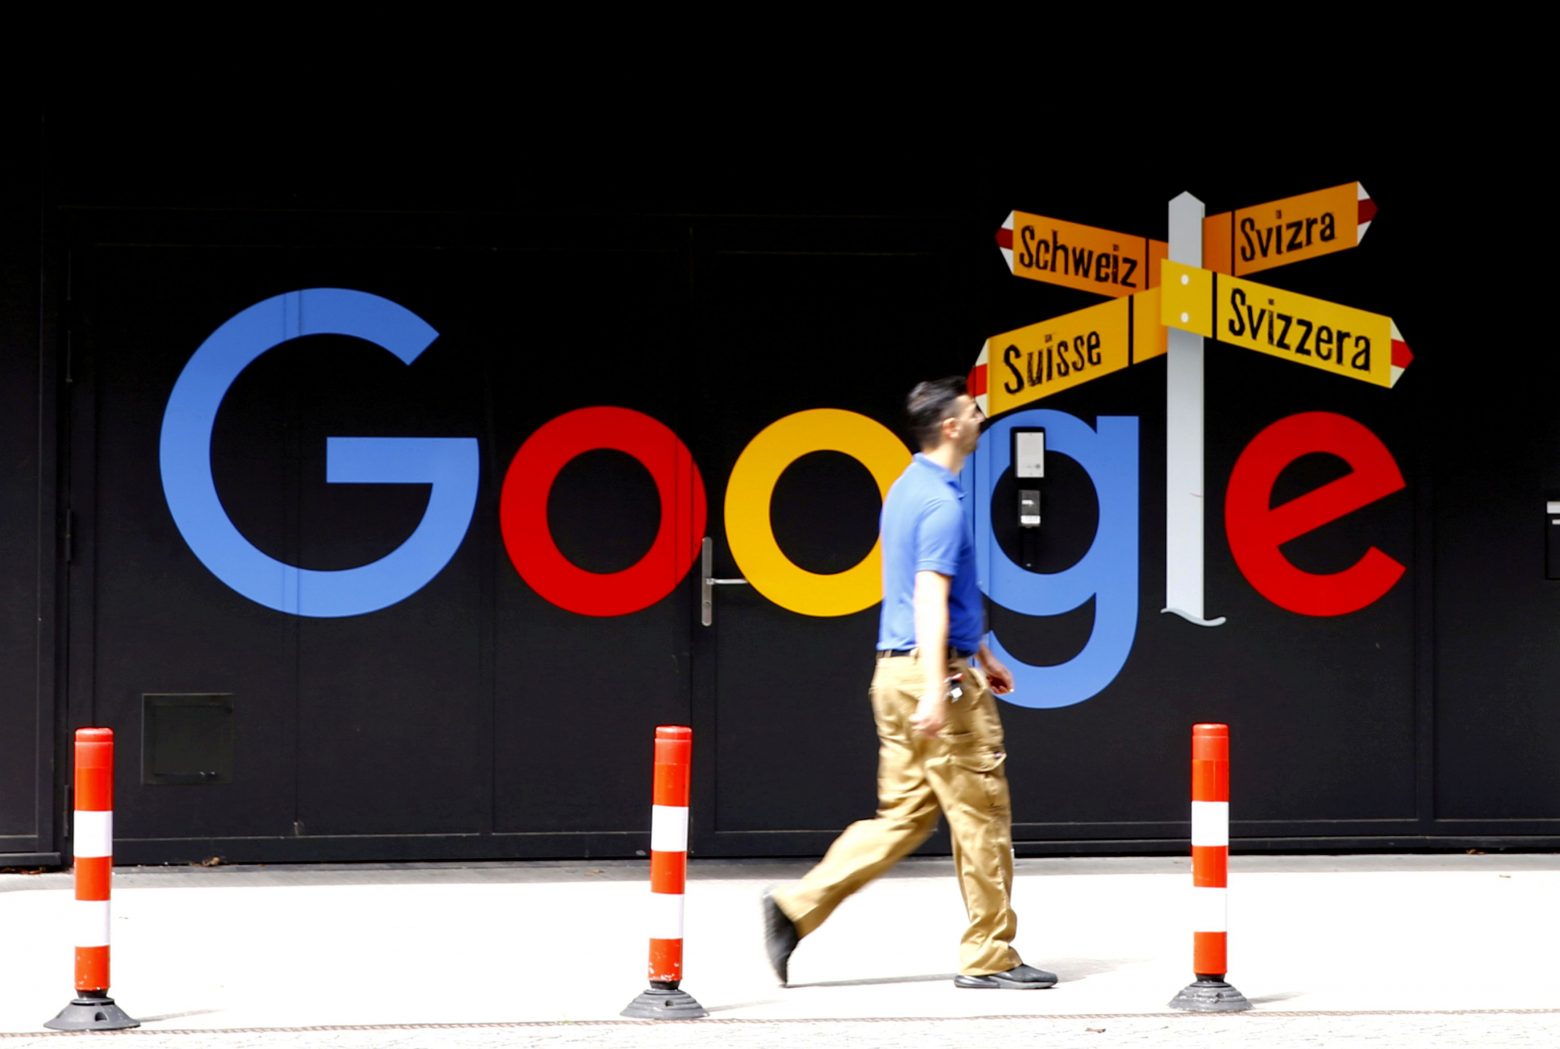 H Google ανοίγει το πρώτο της φυσικό κατάστημα